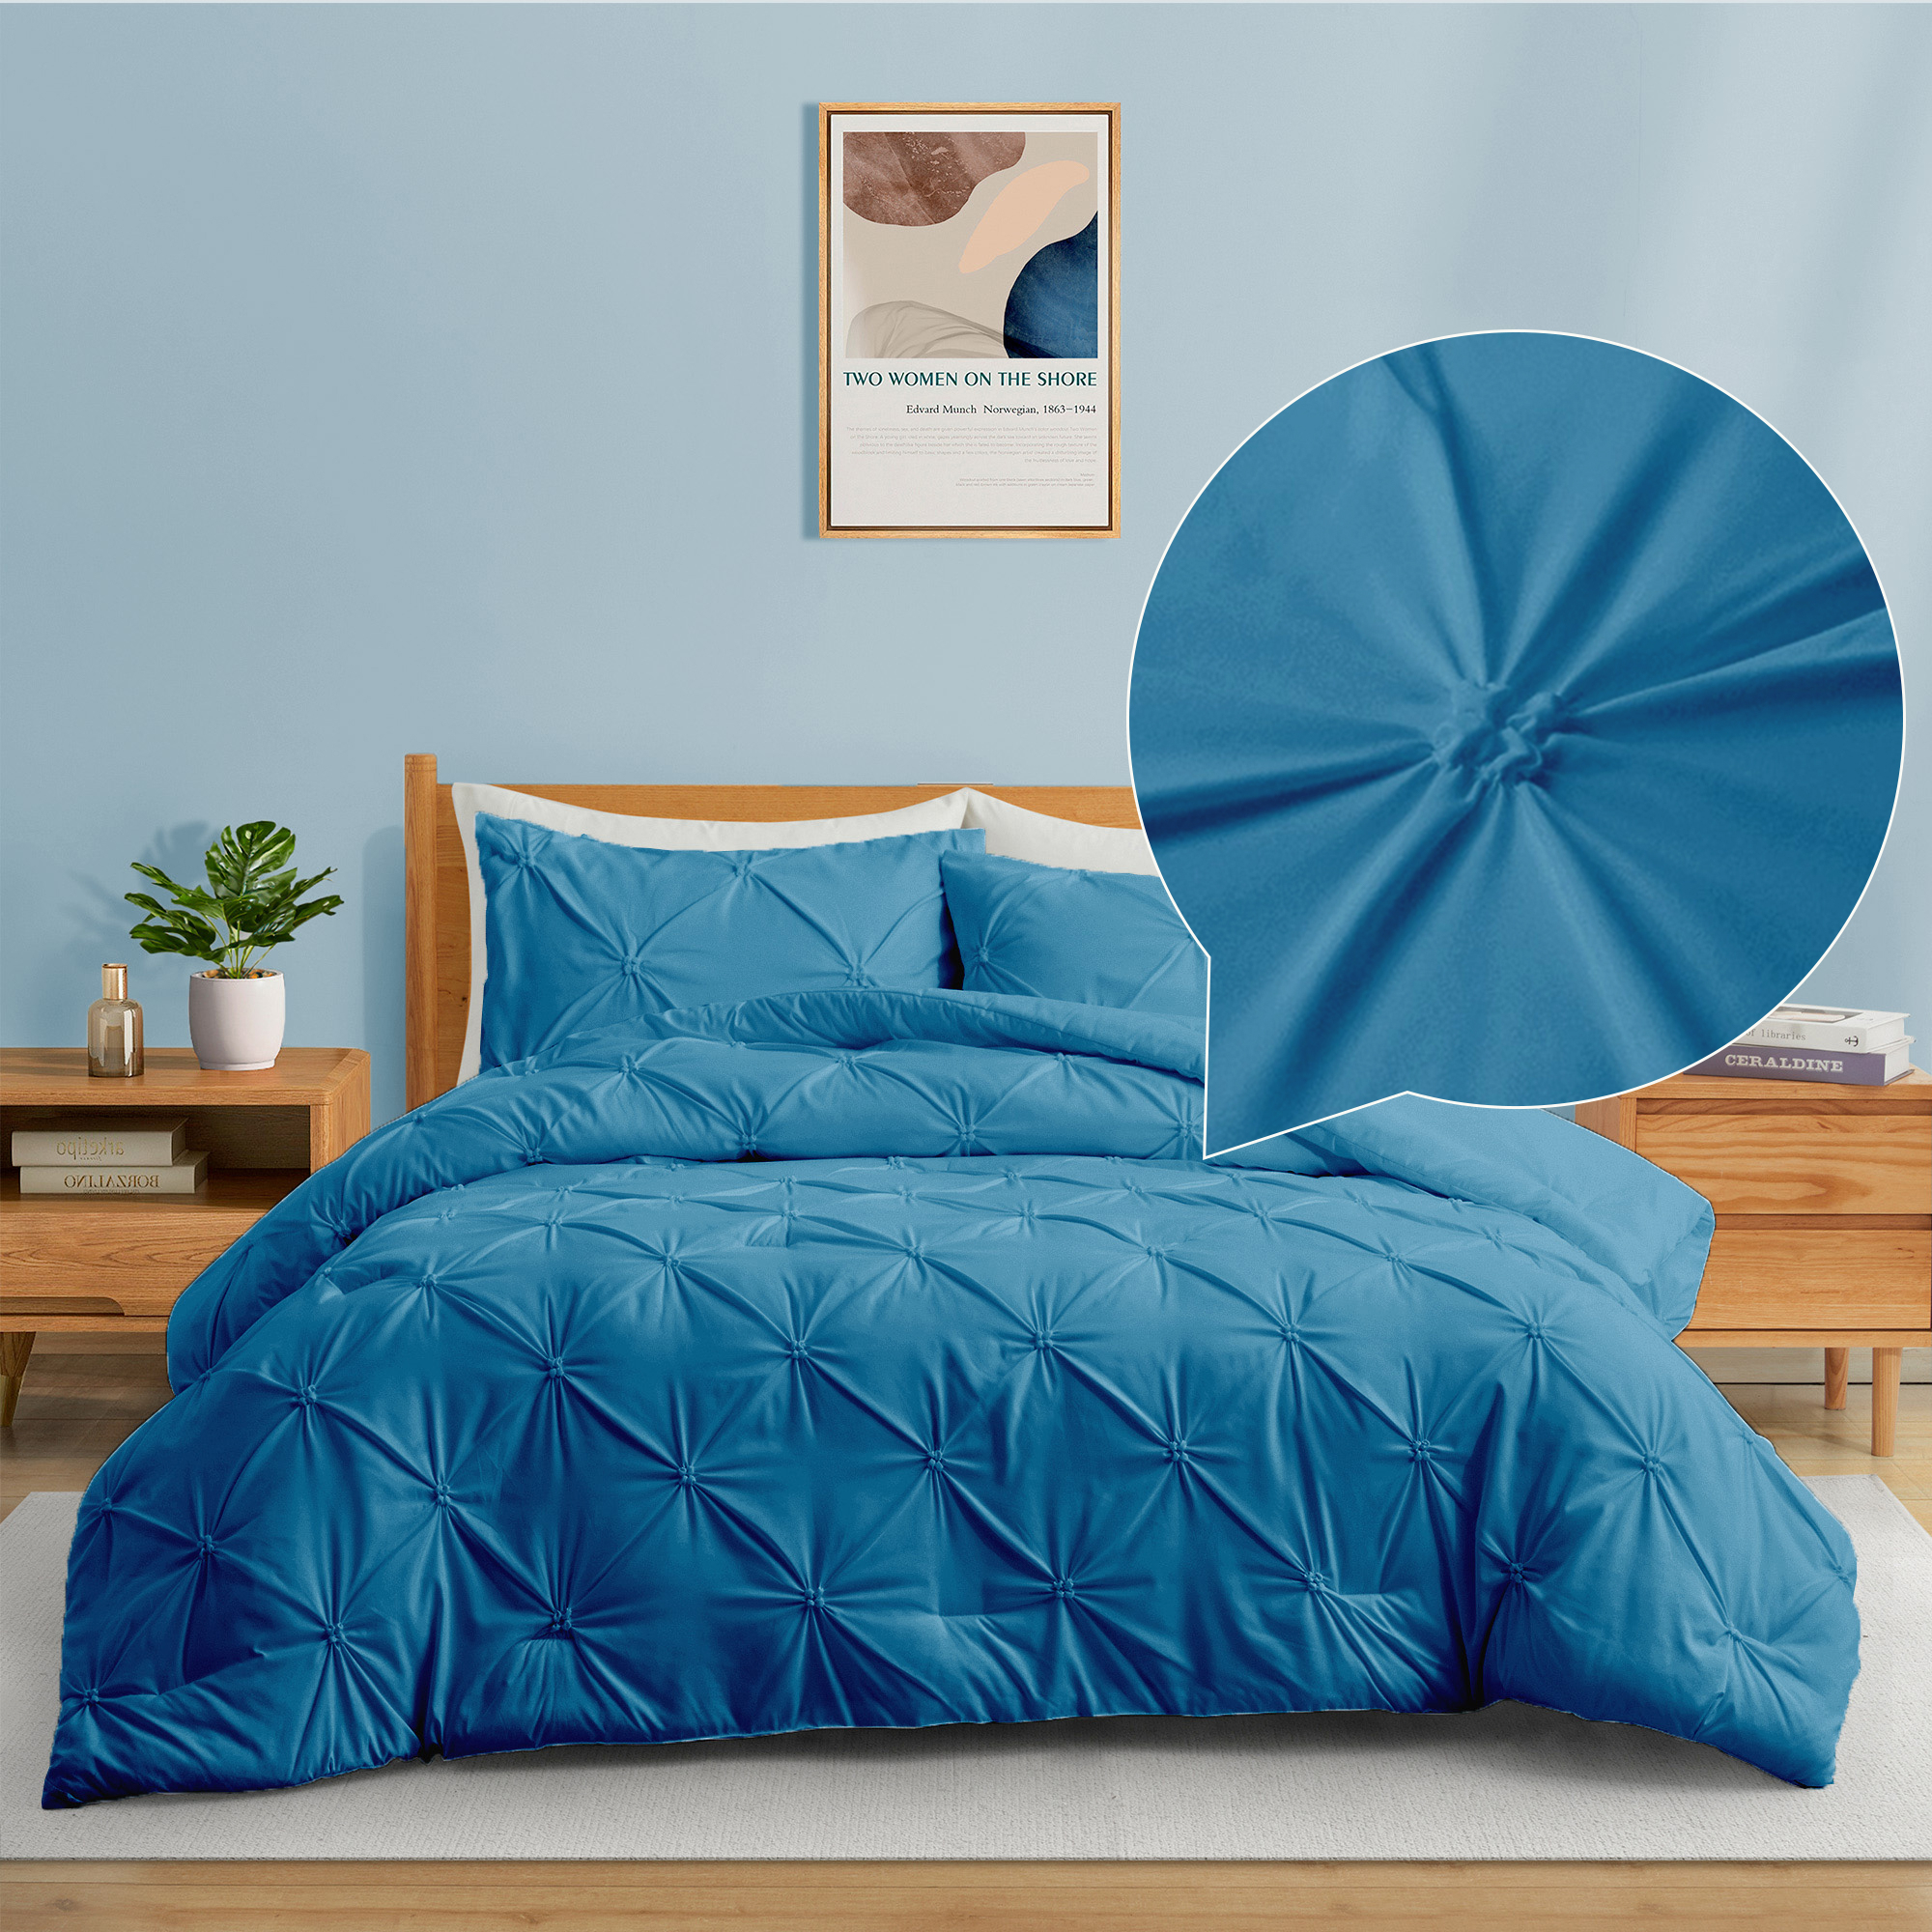 All Seasons Down Alternative Comforter Set, Pinch Pleat Design - Navy Blue, Full/Queen